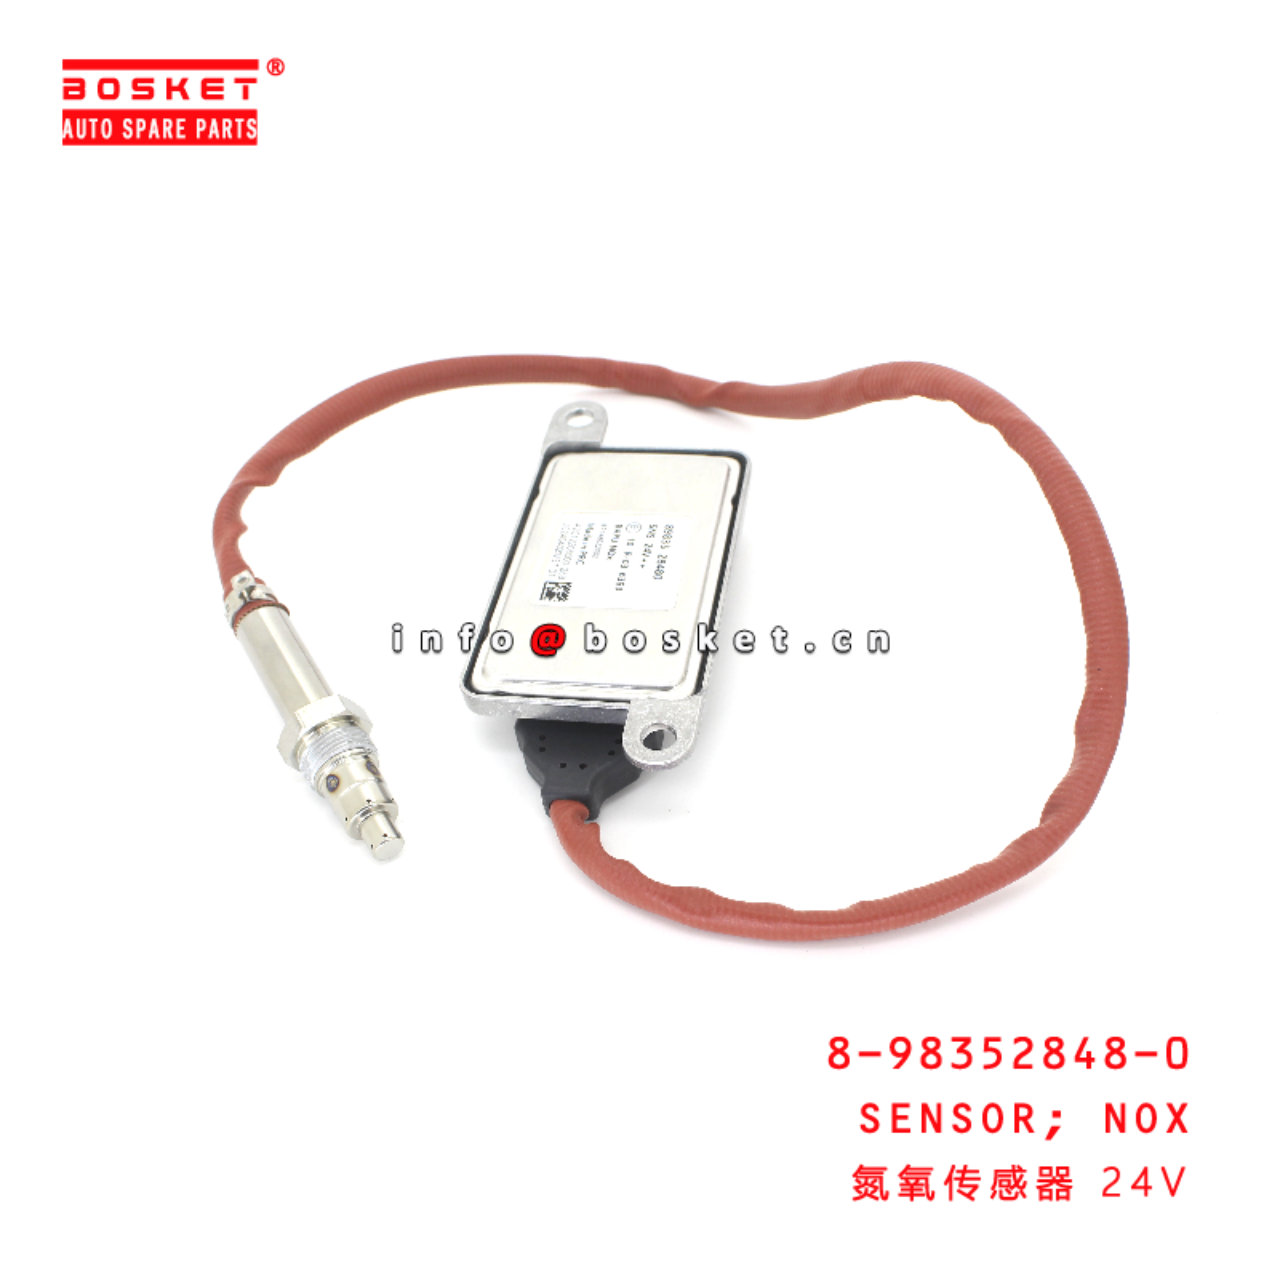 8-98352848-0 Nox Sensor suitable for ISUZU 8983528480 - For Other 